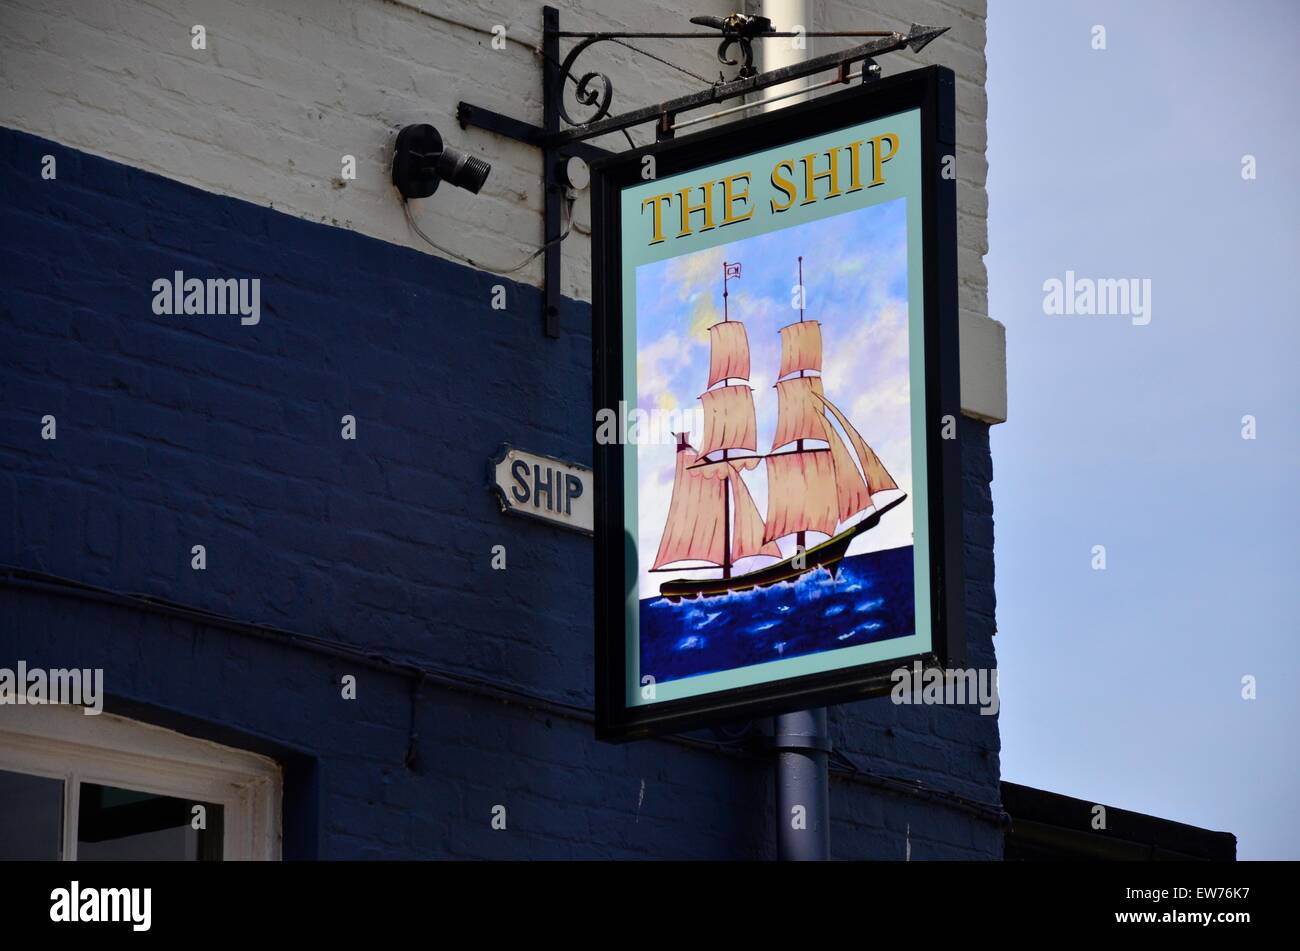 The Ship pub, Thames Bank, Mortlake, London, England, SW14 Stock Photo